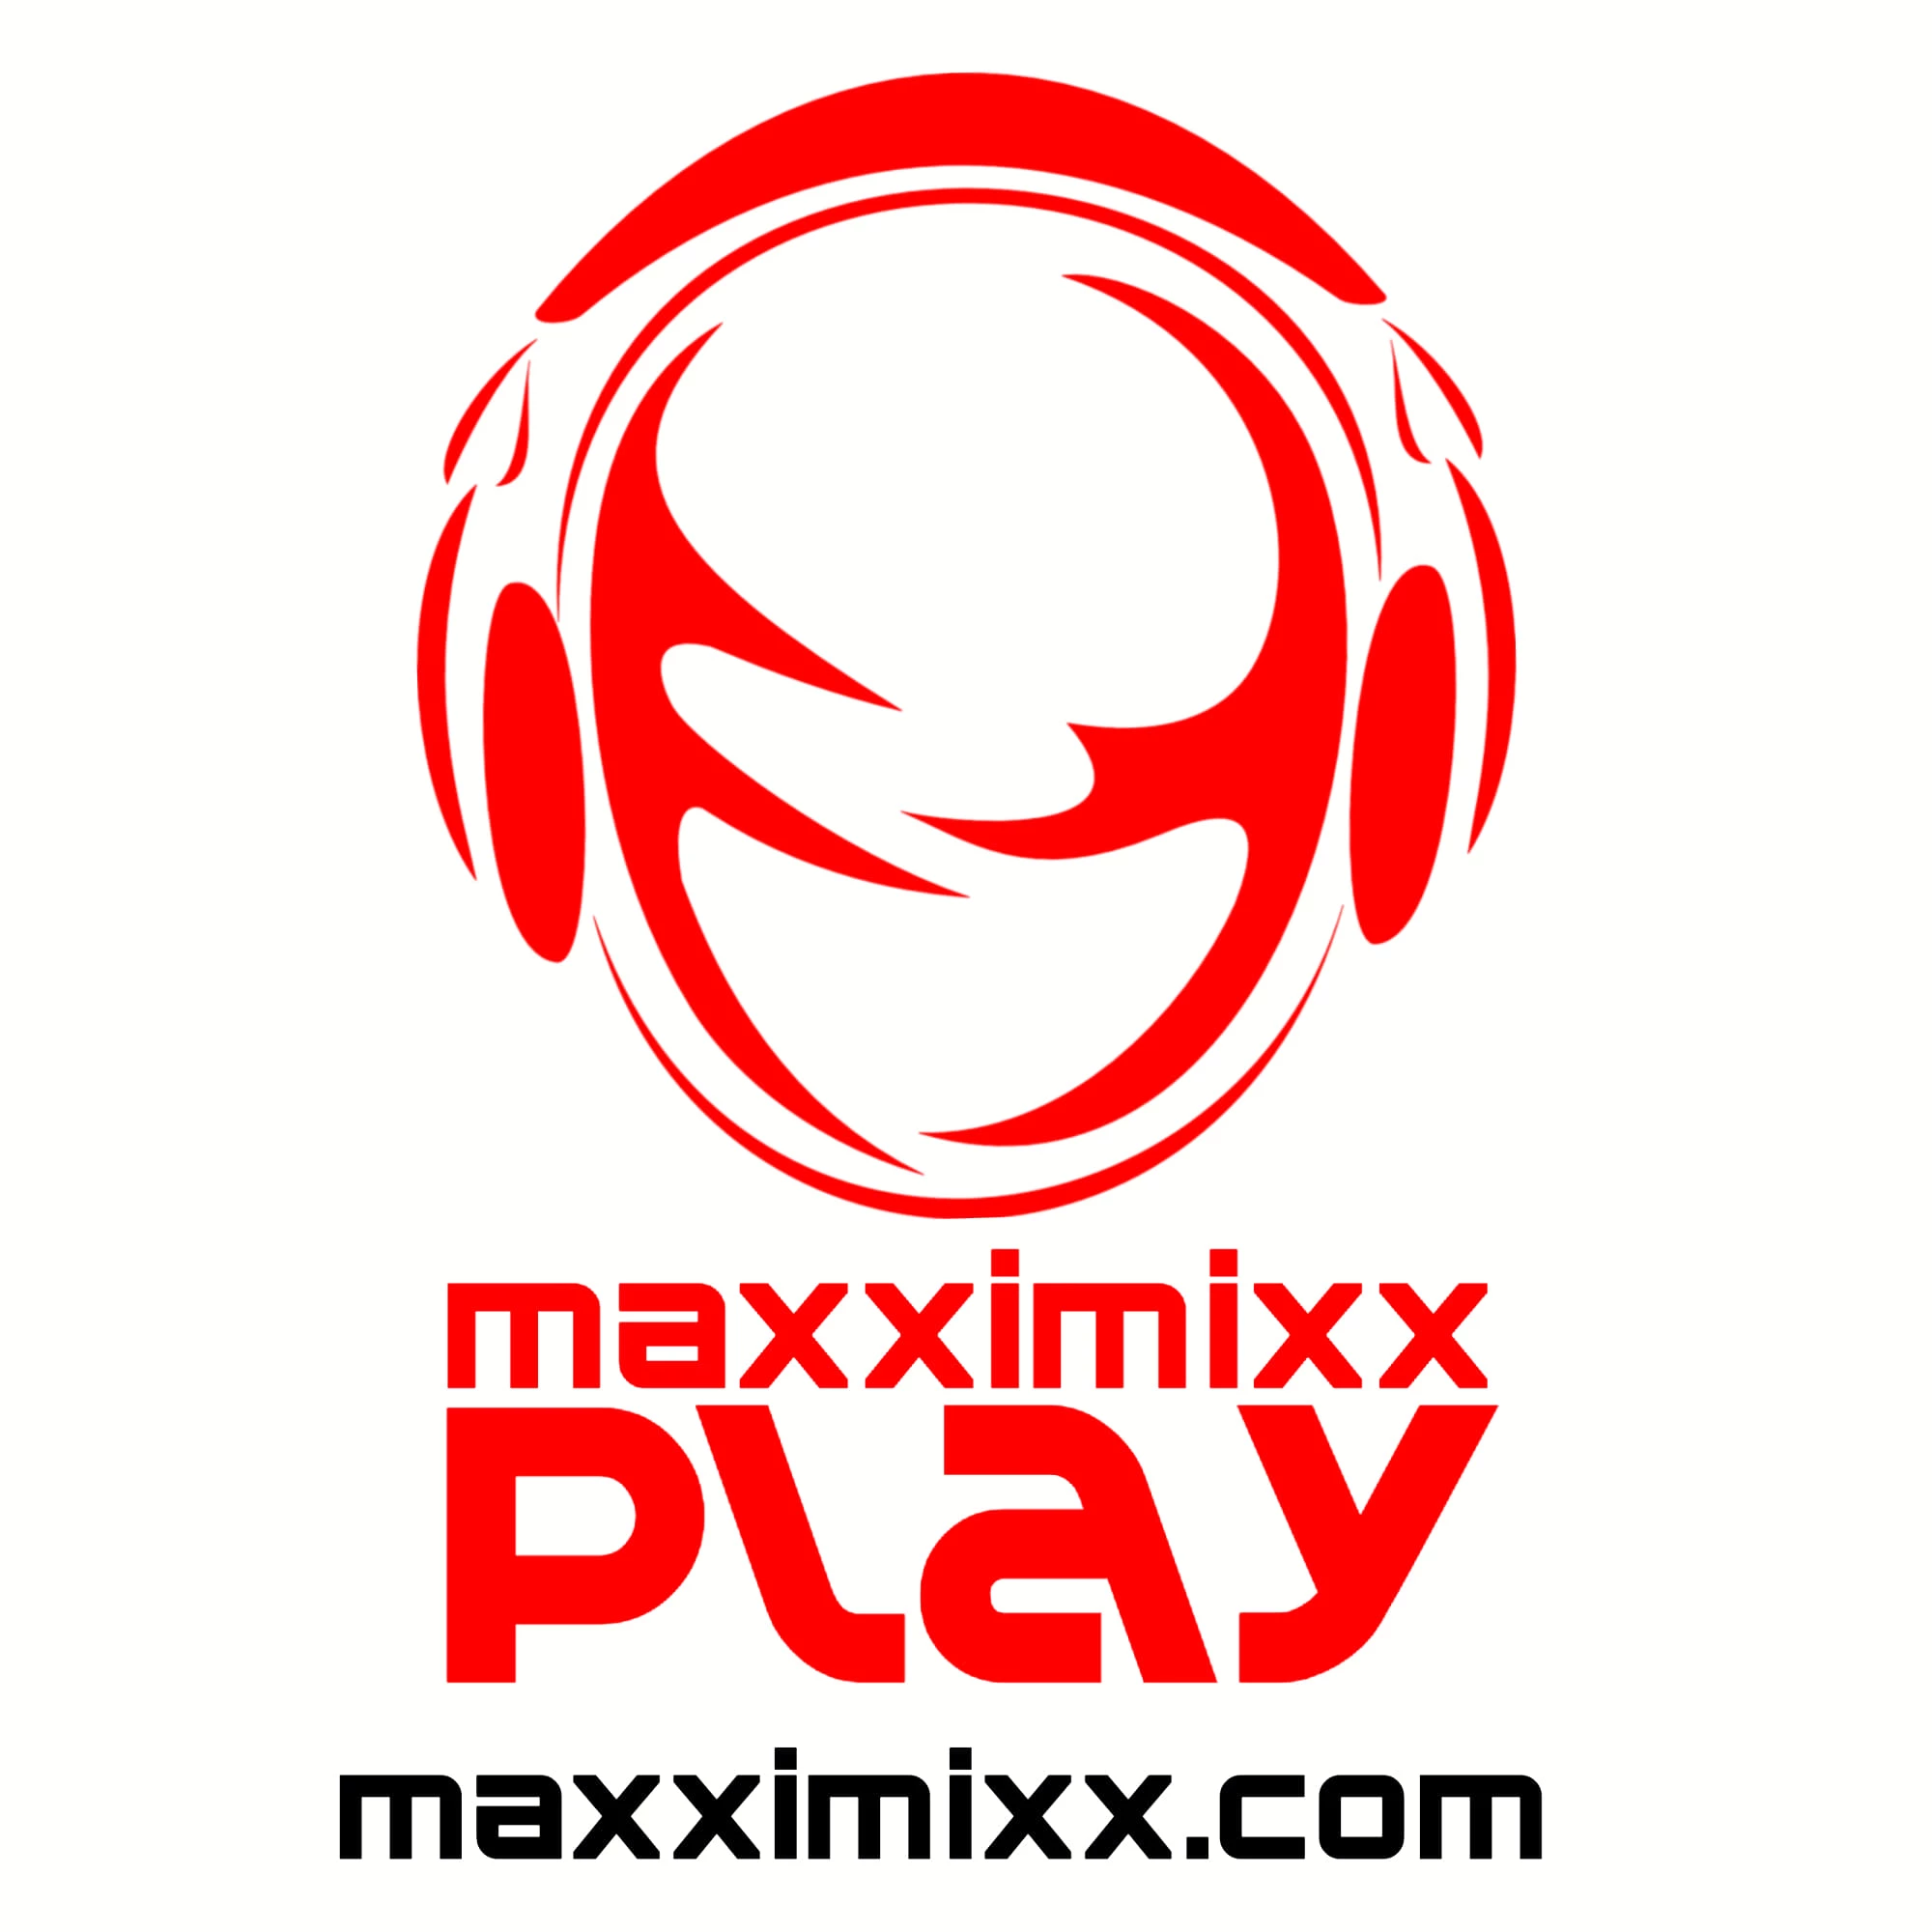 Maxximixx Play